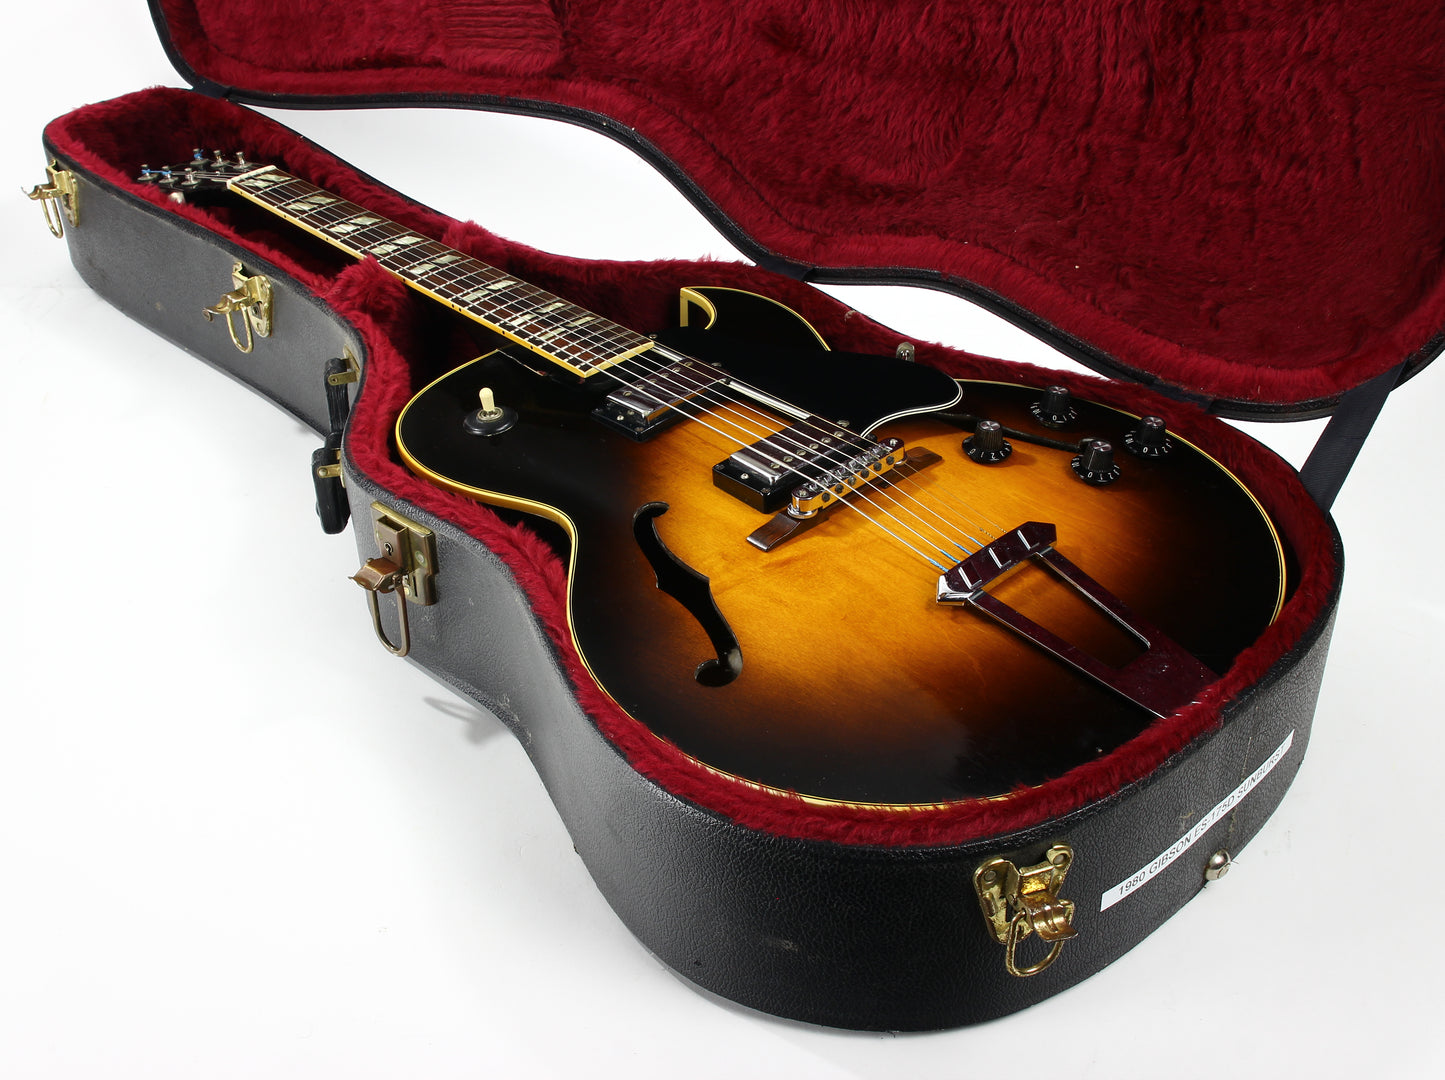 1980 Gibson ES-175 D Sunburst Jazz Archtop Electric Guitar - Tobacco Sunburst, No Breaks, No Repairs!